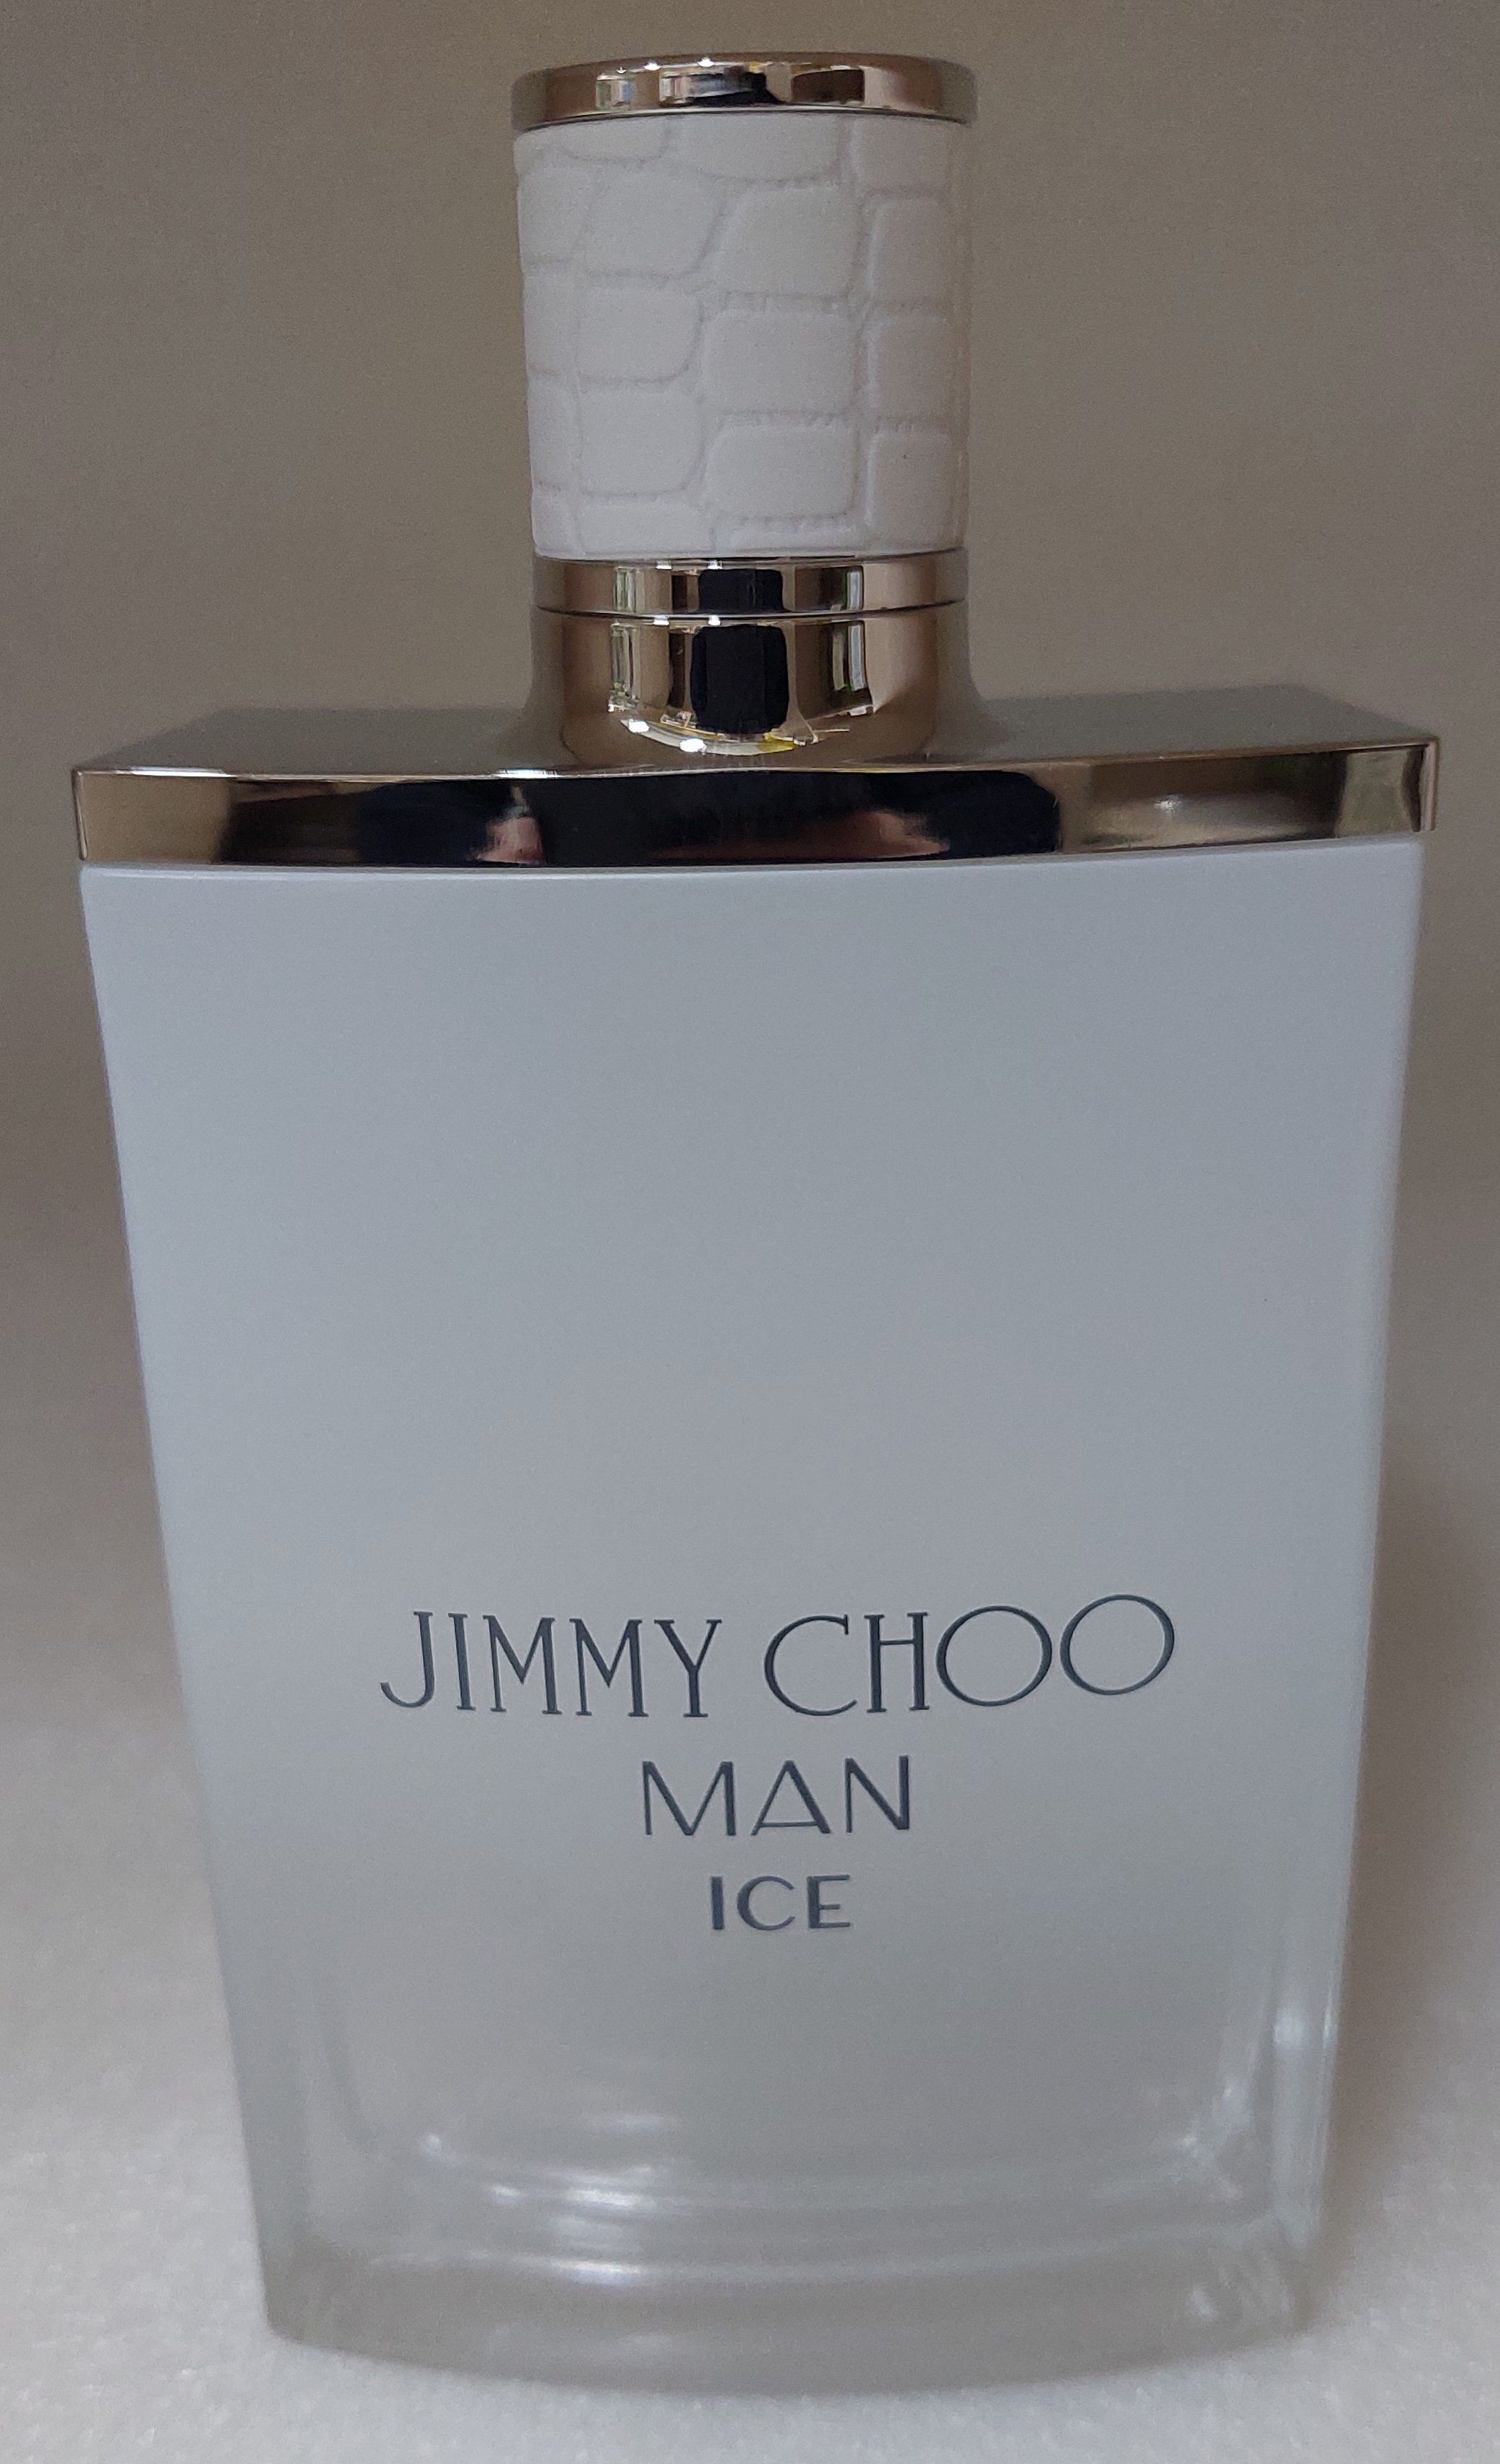 Jimmy Choo man Ice.